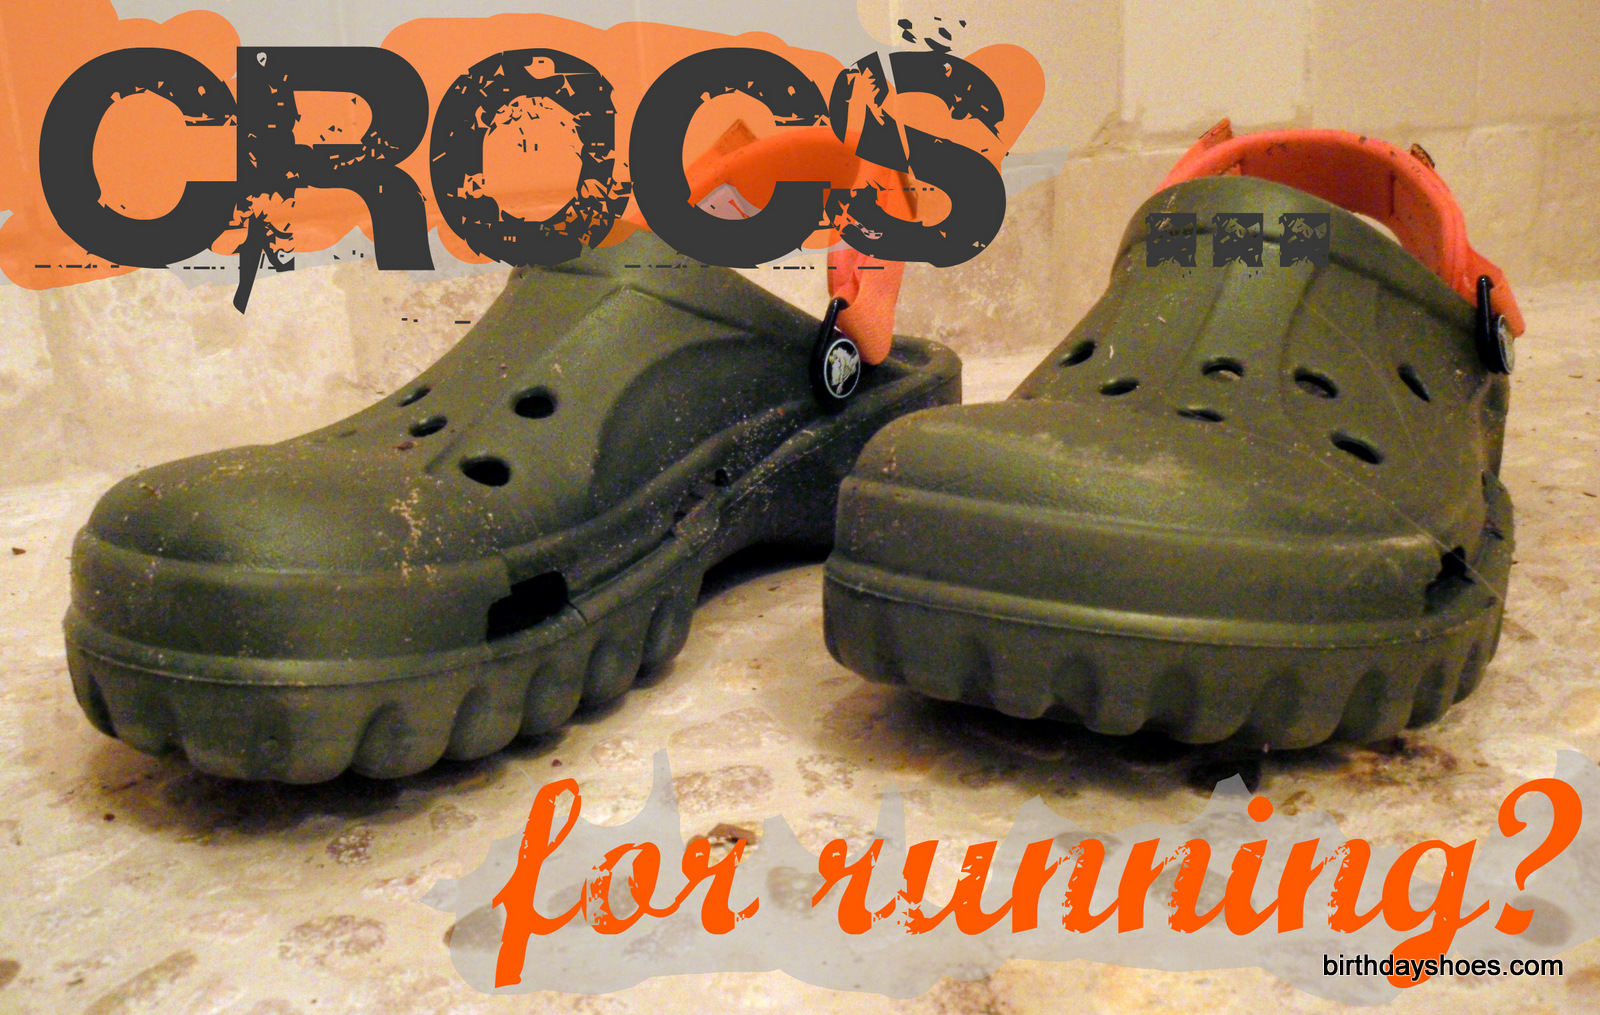 crocs trail shoes